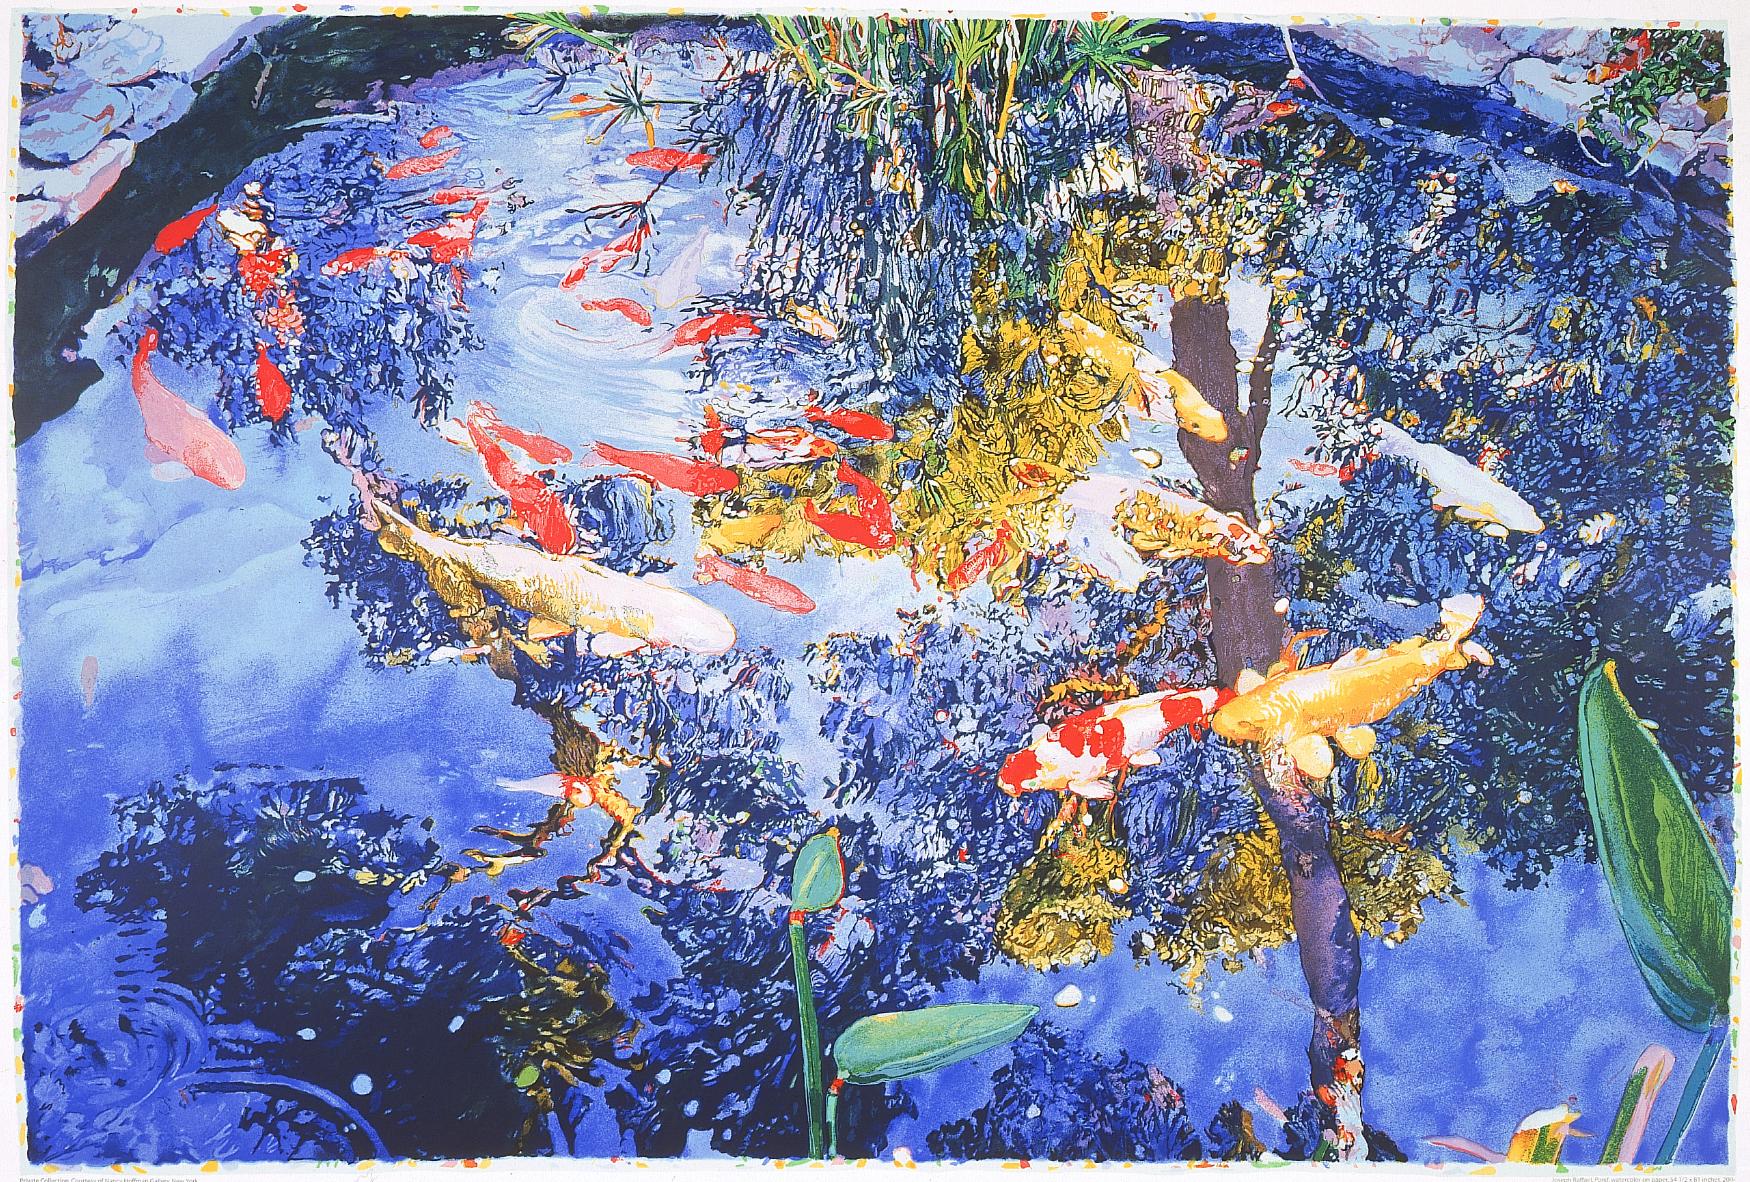 Pond, screen print, 2004 by Joseph Raffael (red & yellow koi in pond)